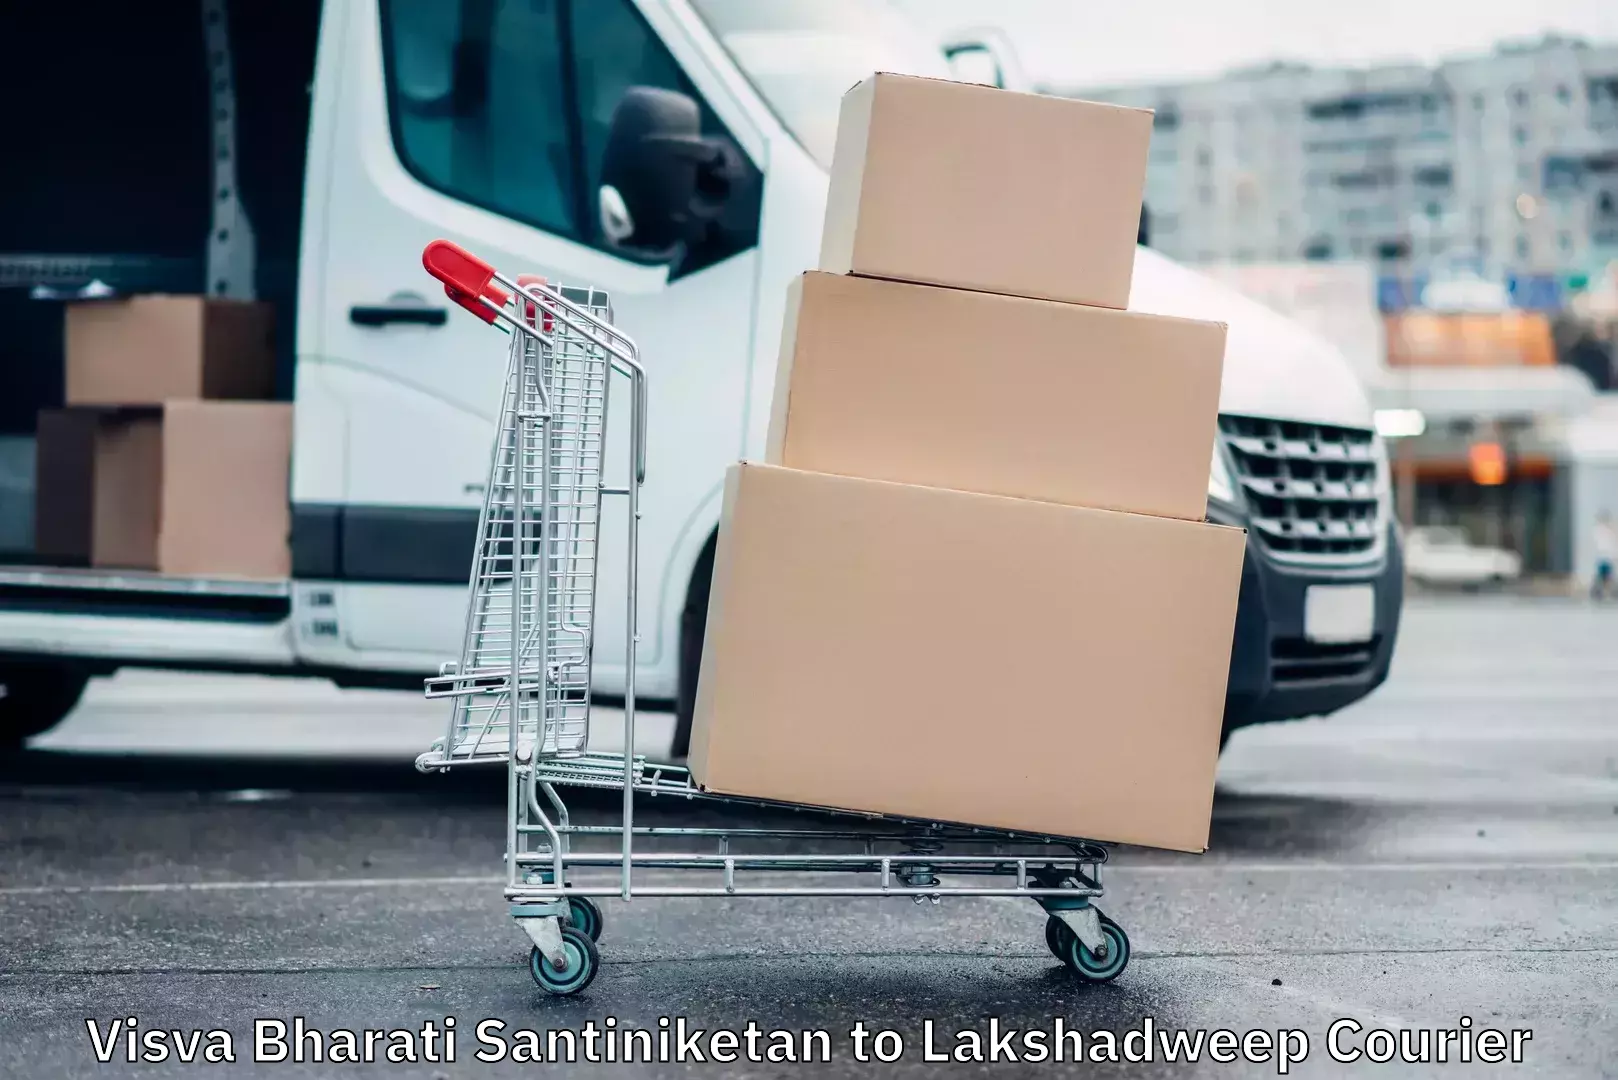 International parcel service Visva Bharati Santiniketan to Lakshadweep